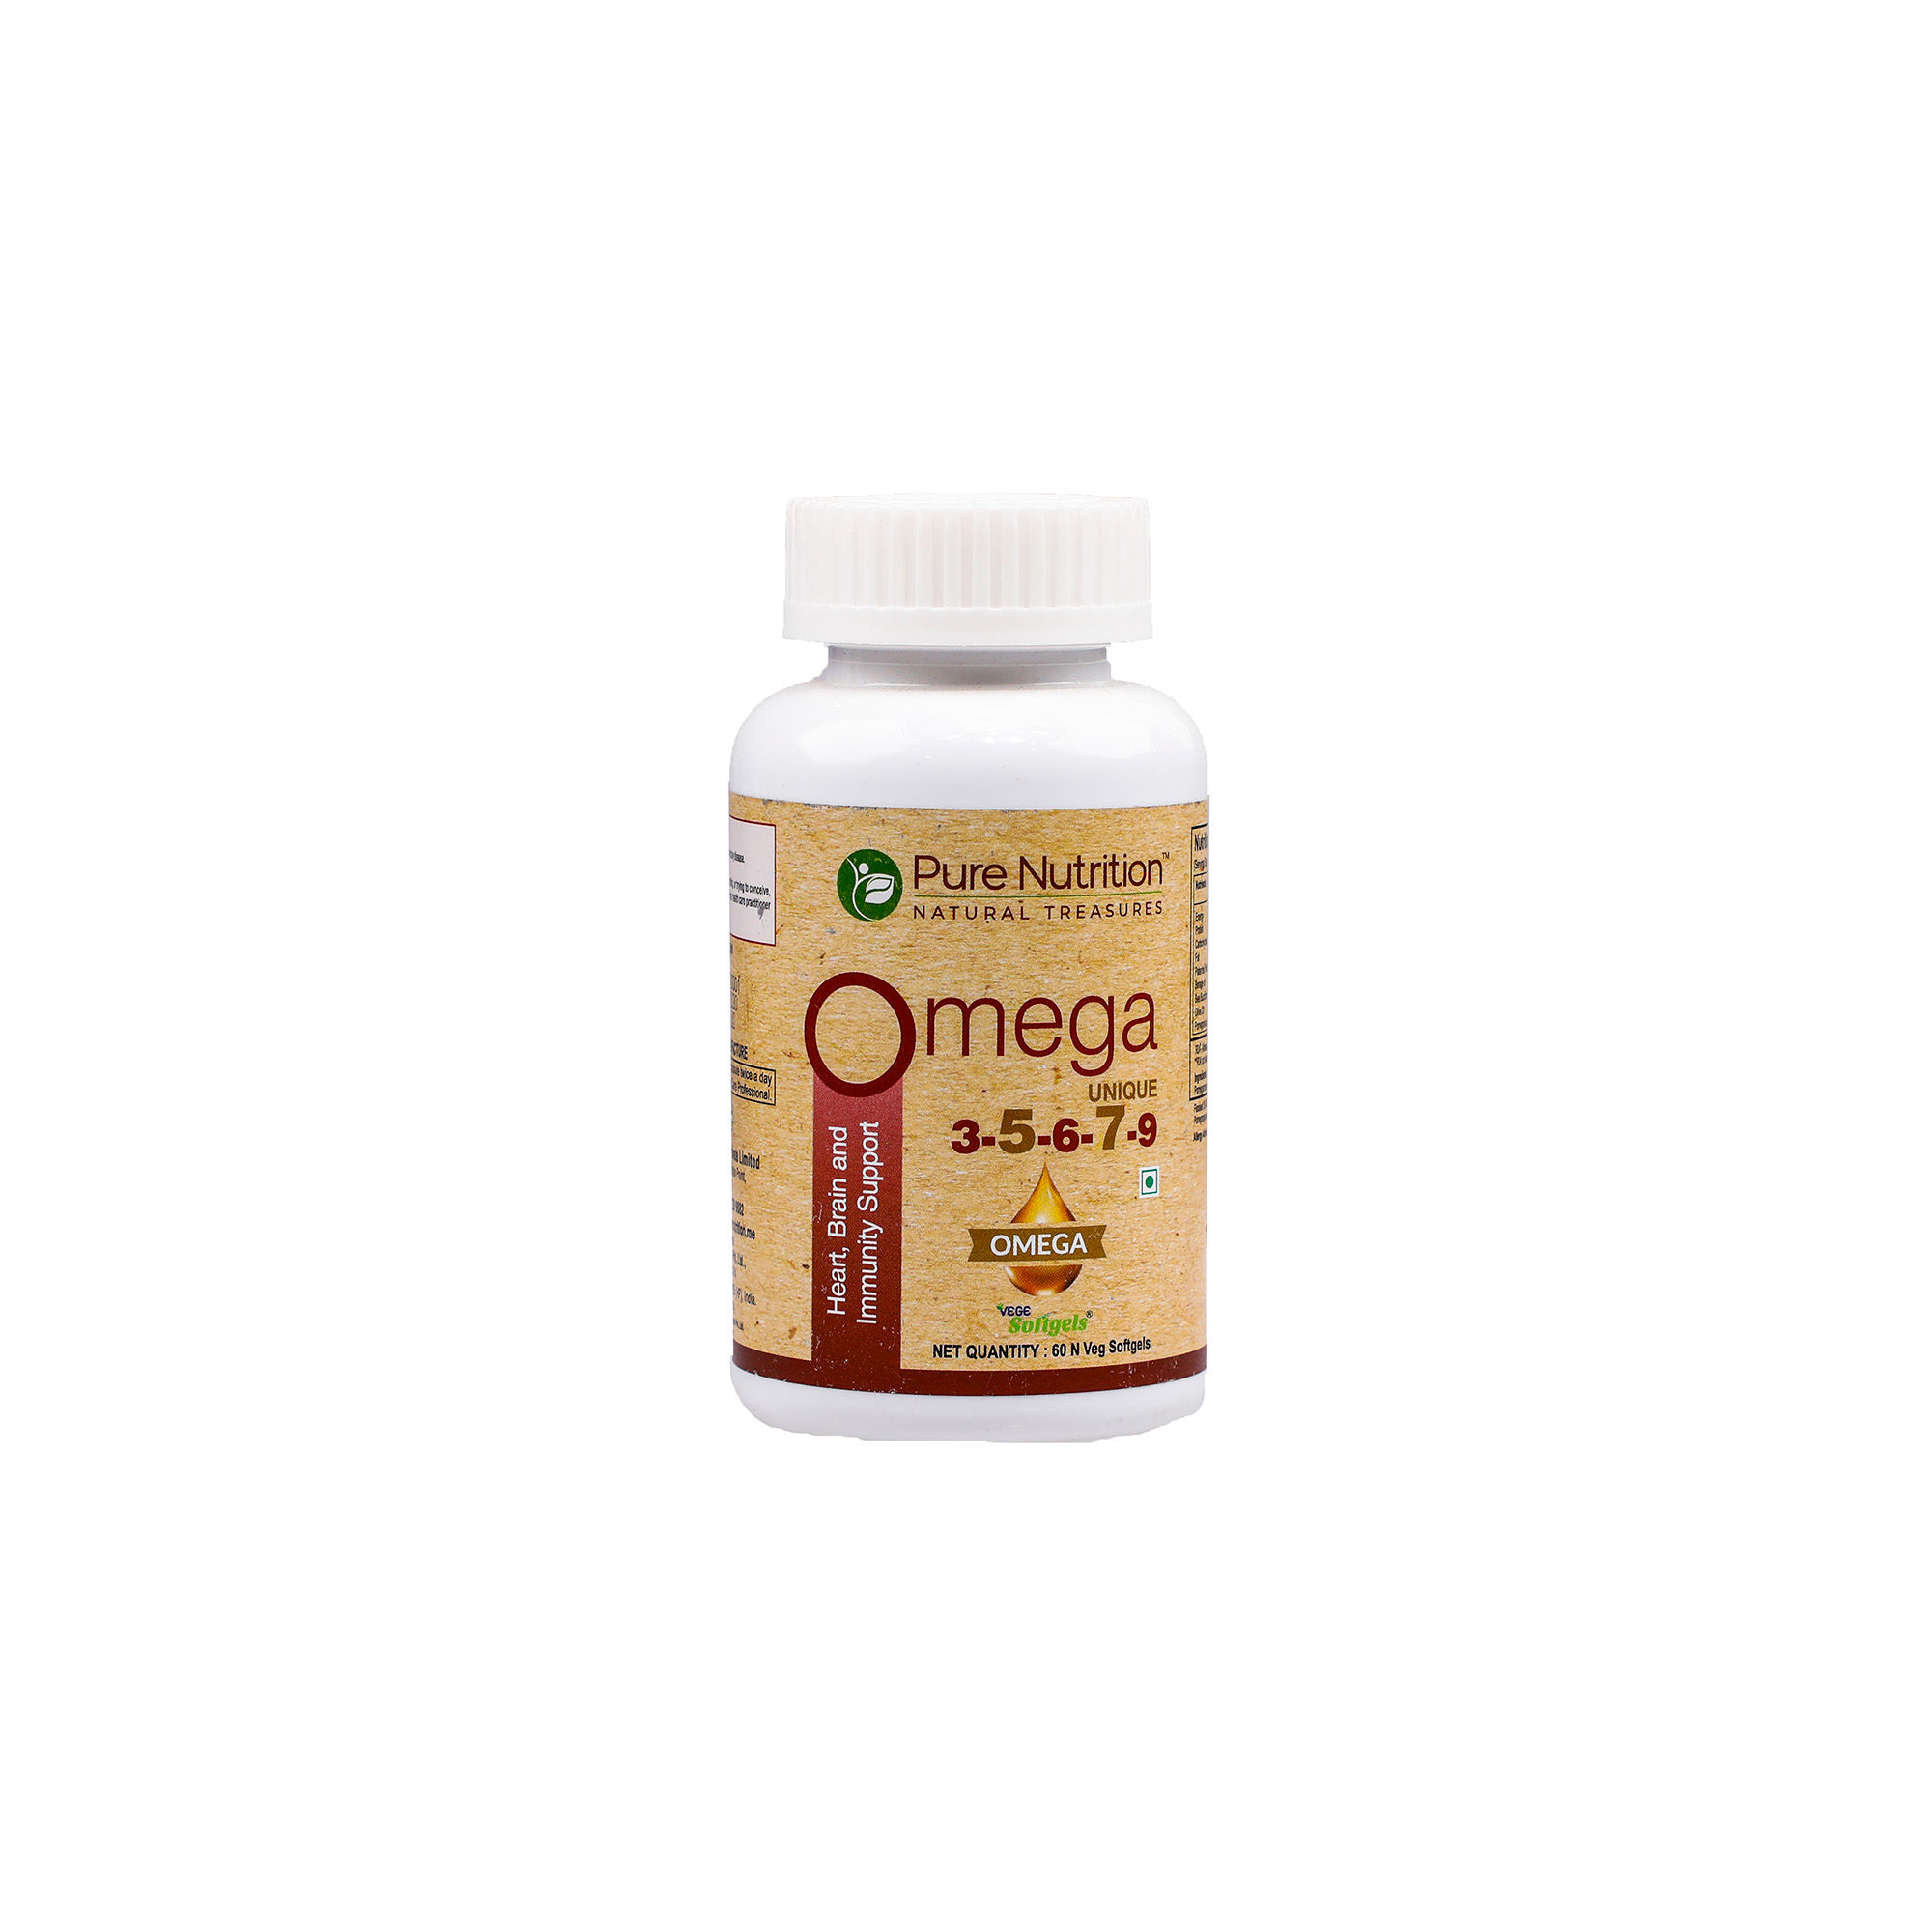 Buy Pure Nutrition Omega Unique 3-5-6-7-9, 60 Capsules Online